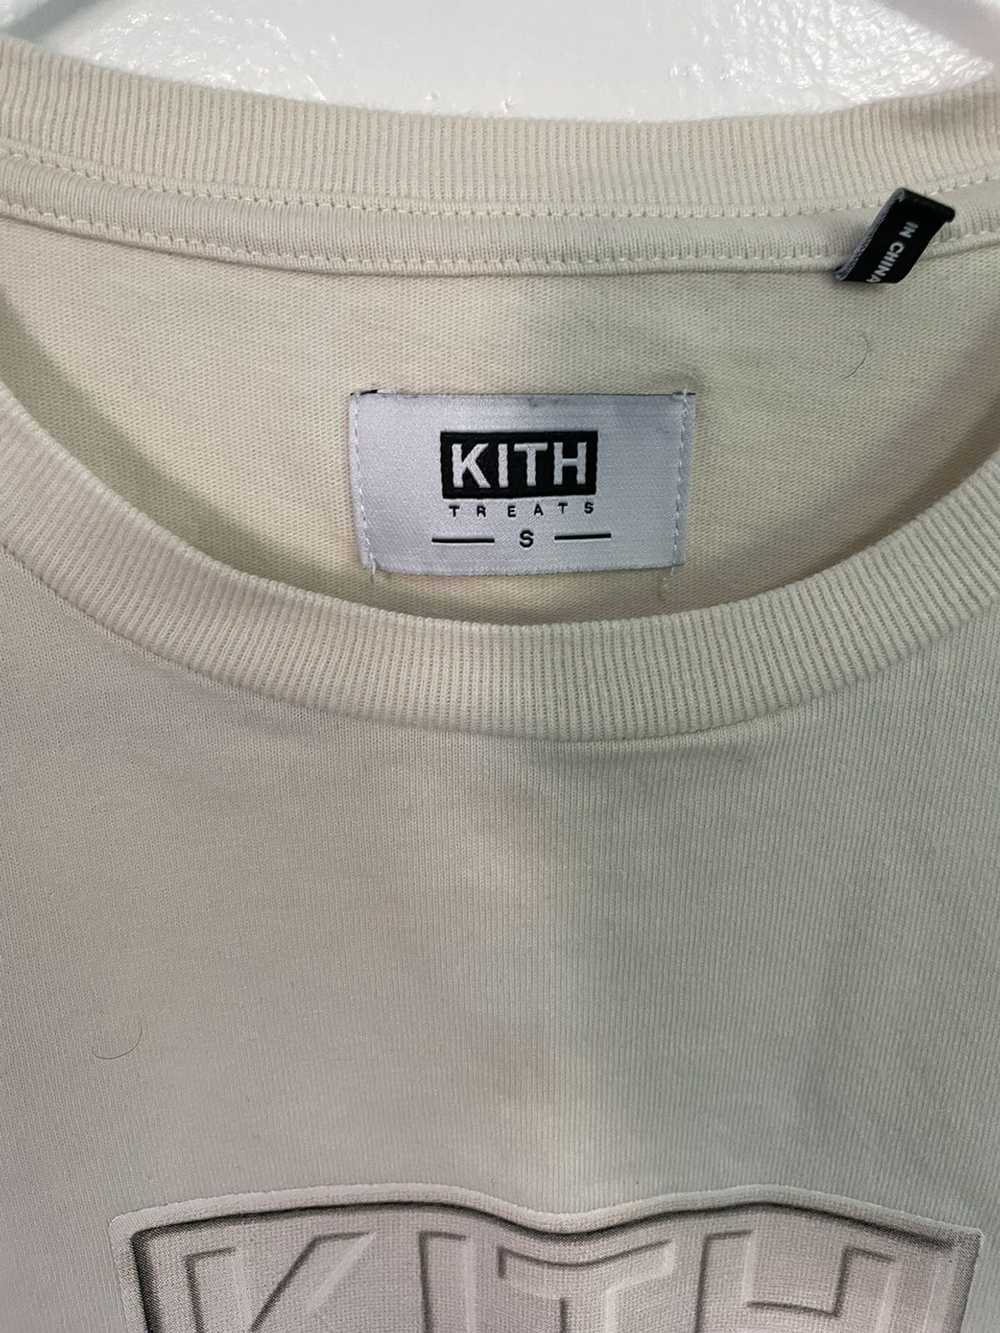 Kith Kith box logo t shirt - image 3